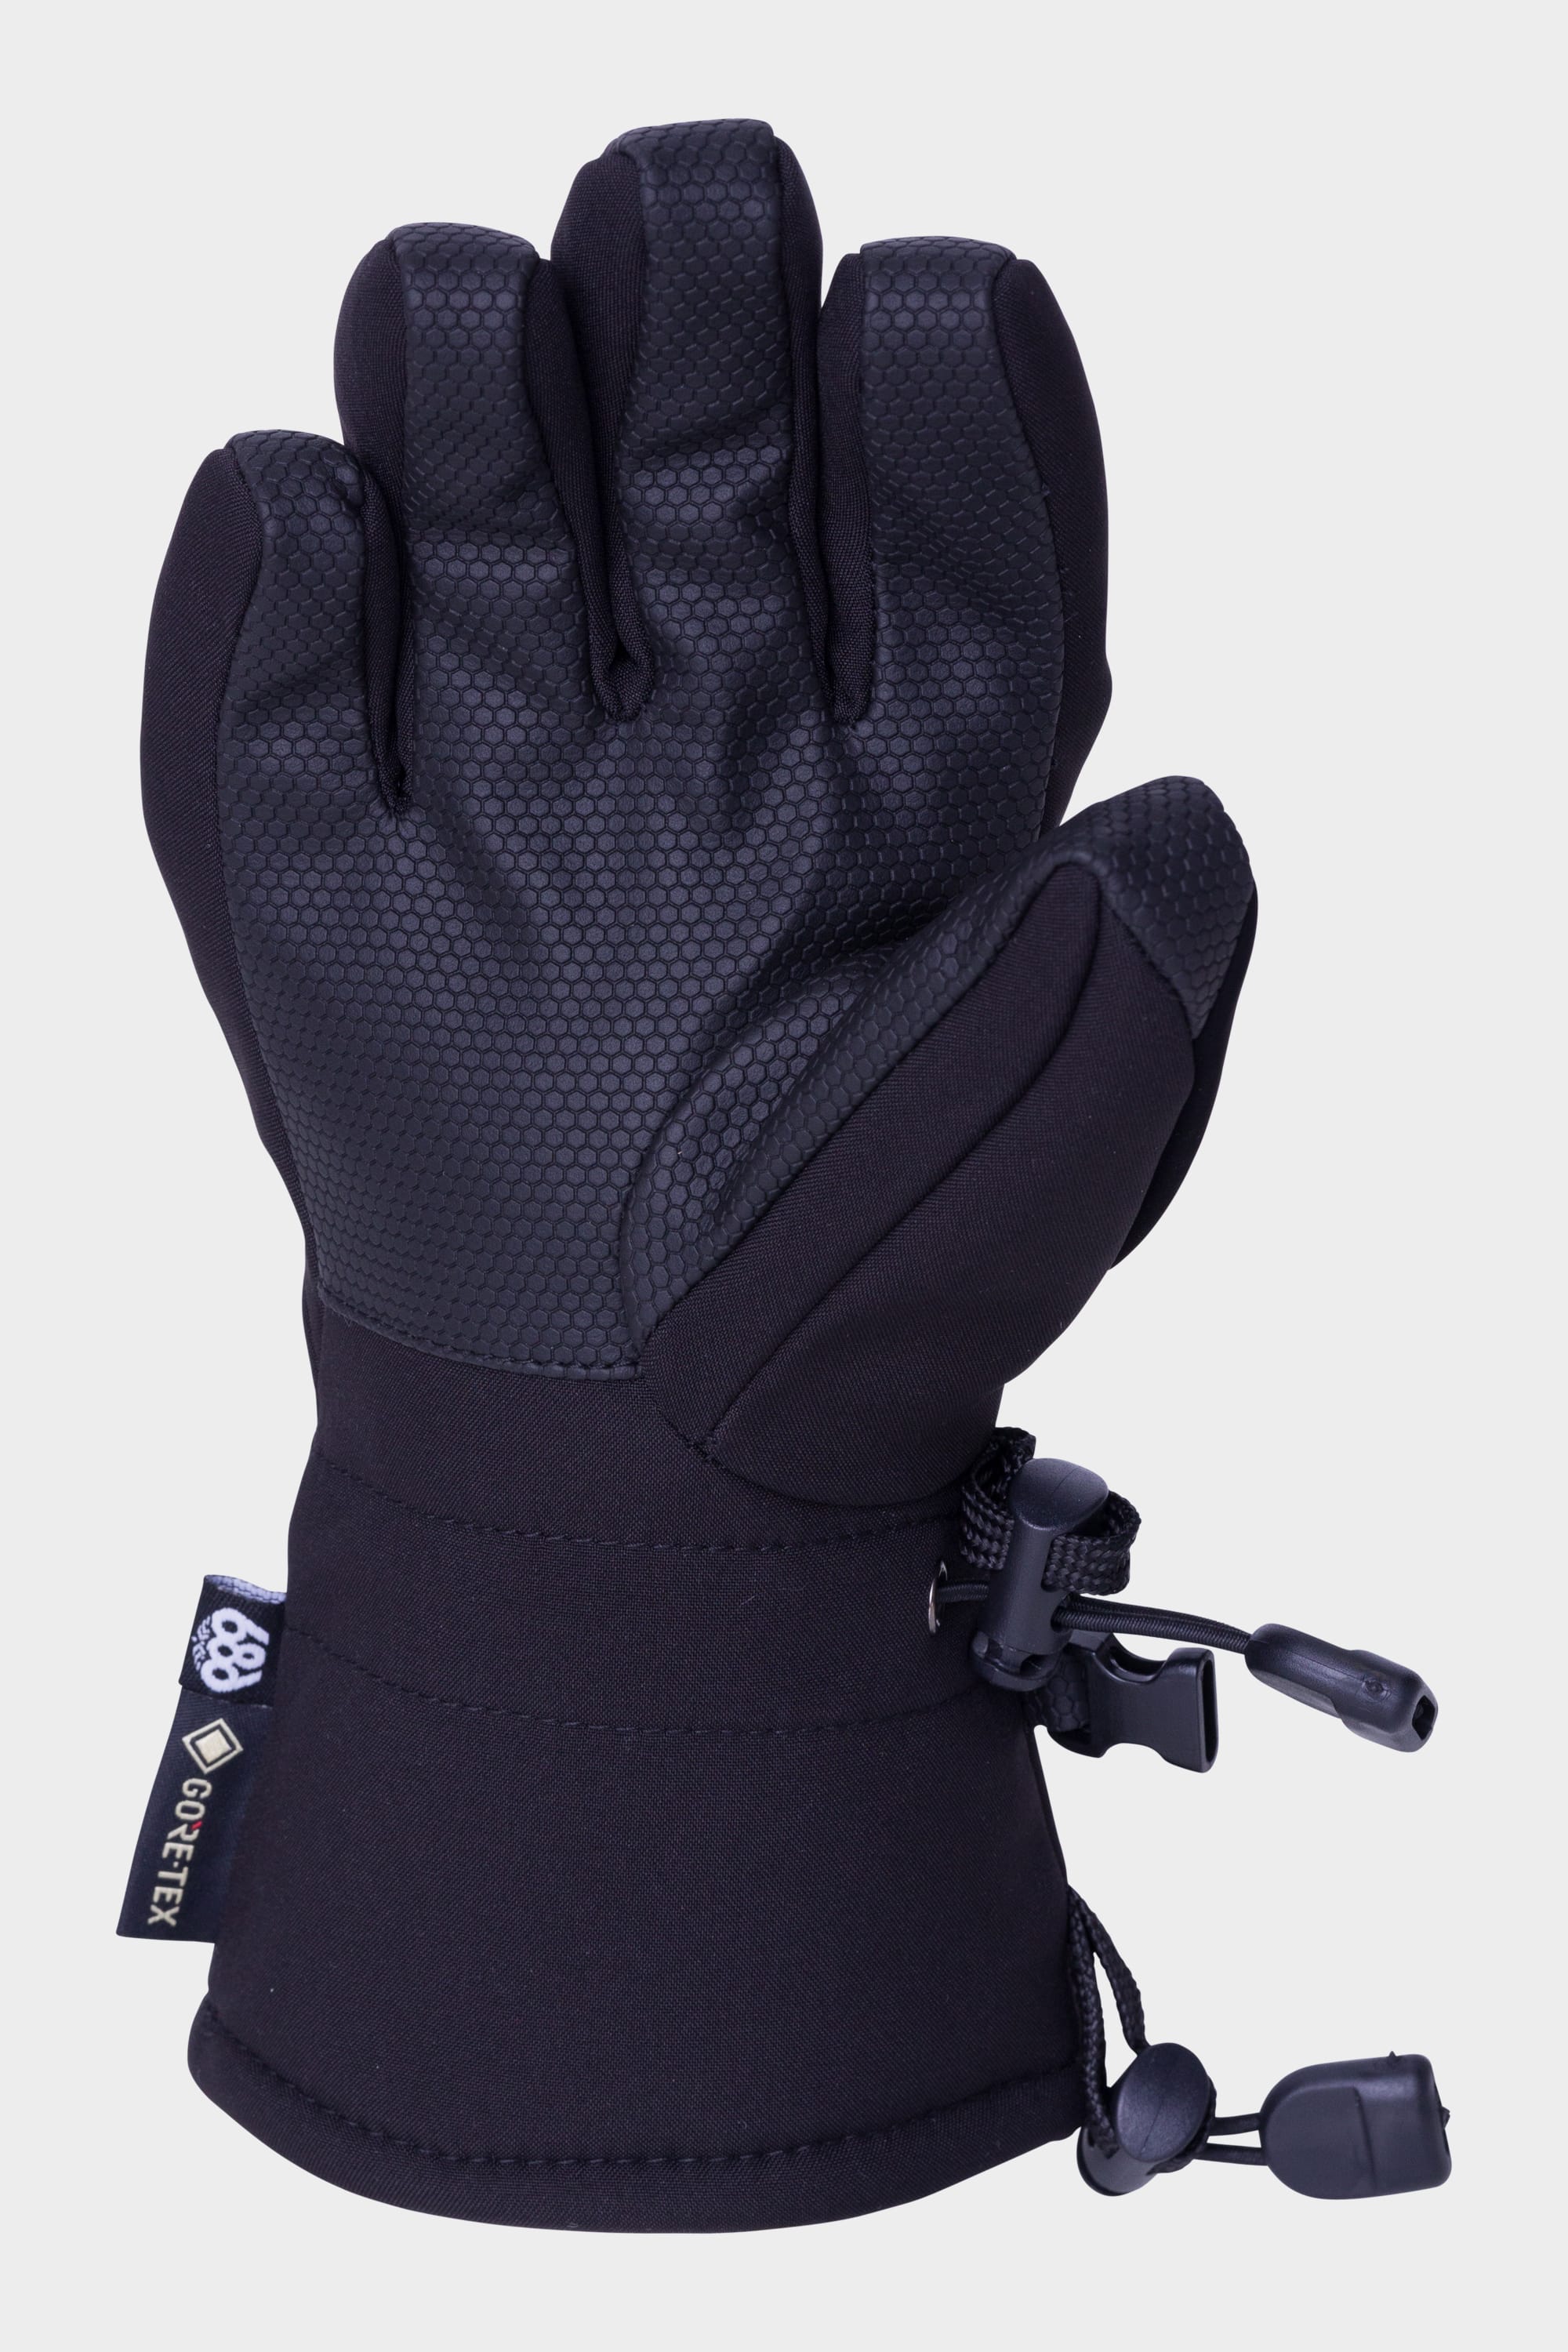 686 Youth GORE-TEX Linear Glove – 686.com